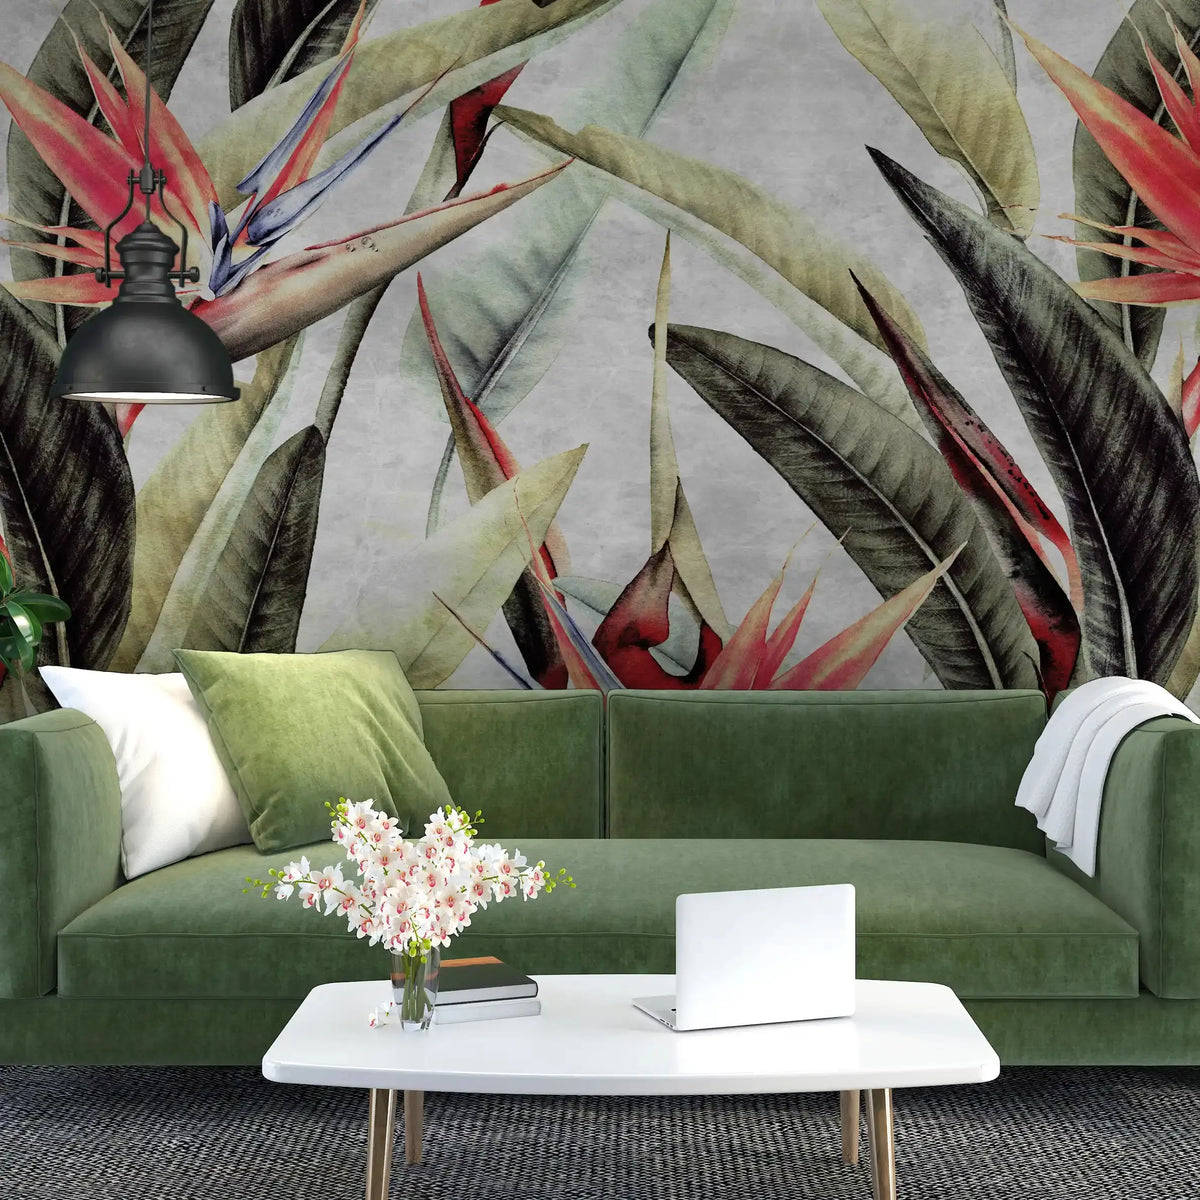 3039-D / Tropical Bird of Paradise Peel and Stick Wallpaper – Vibrant Botanical Design Wall Decor - Artevella